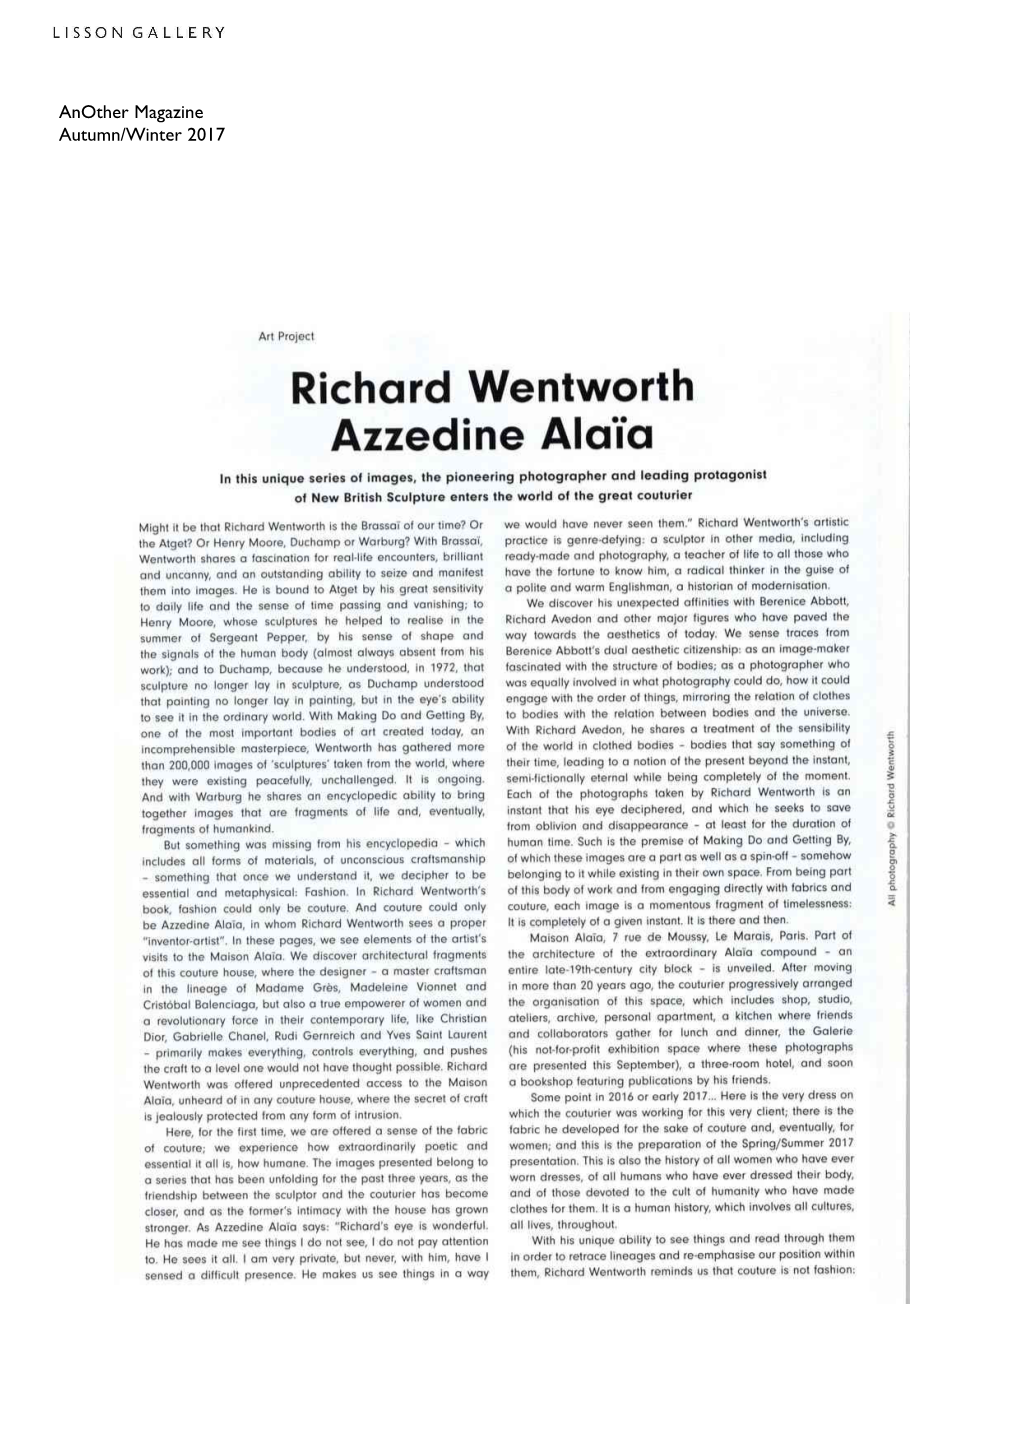 Richard Wentworth Azzedine Alata